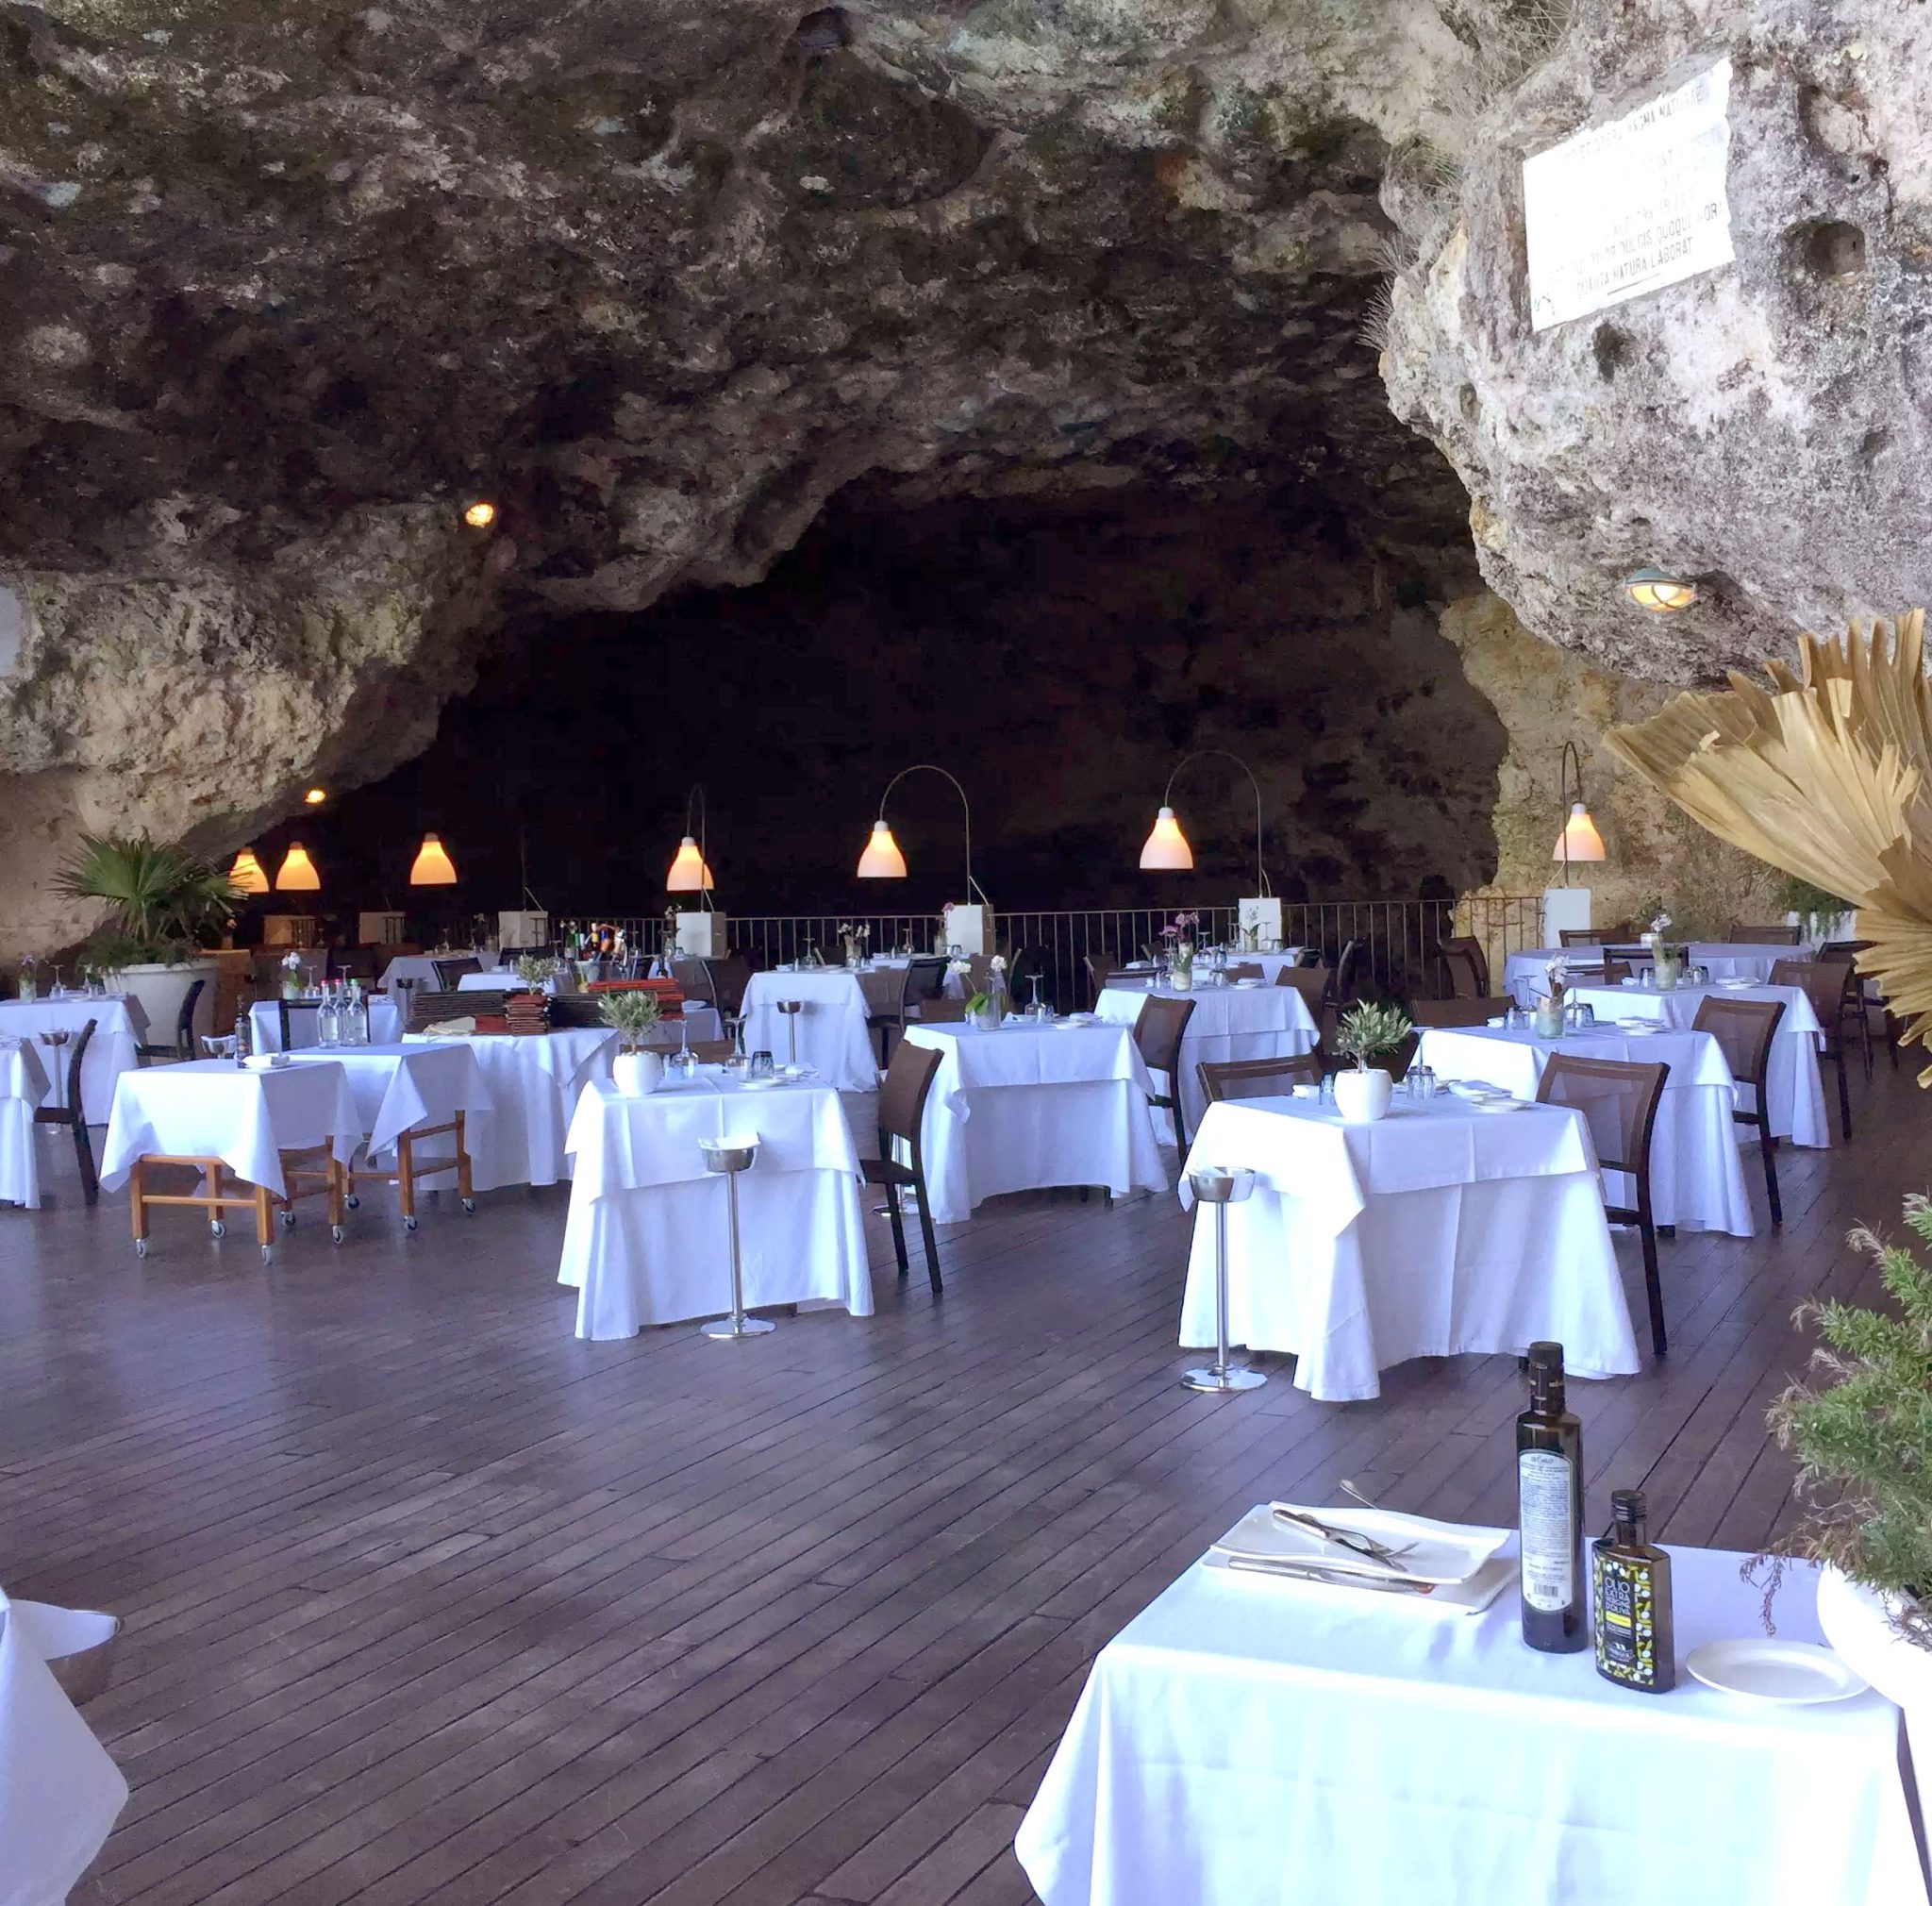 Polignano A Mare Puglia Italy Grotta Palazzese lunch Birthday Princess cave Restaurant View